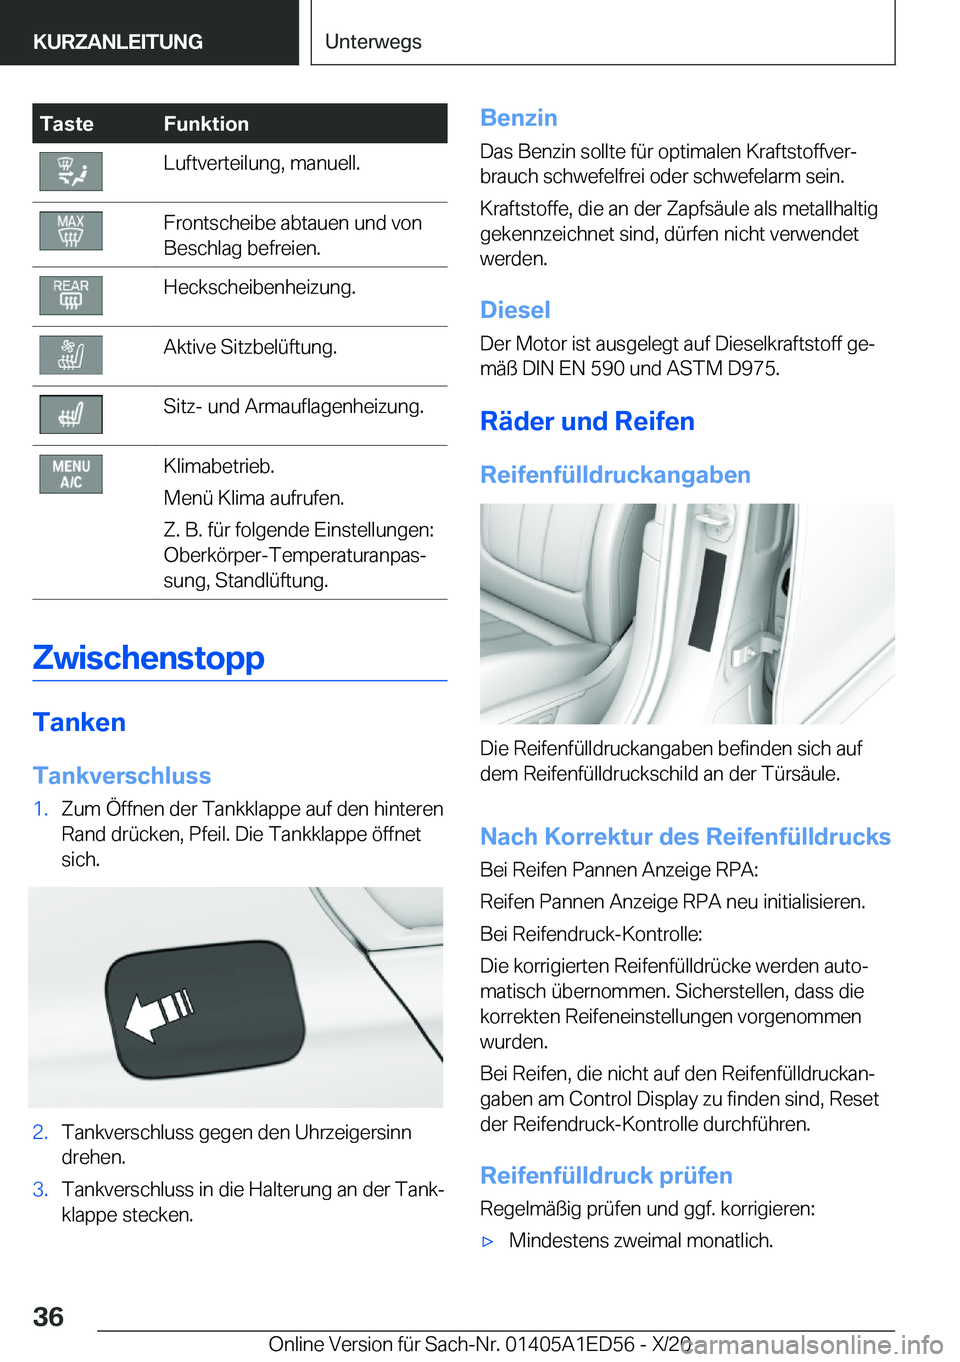 BMW 8 SERIES CONVERTIBLE 2021  Betriebsanleitungen (in German) �T�a�s�t�e�F�u�n�k�t�i�o�n�L�u�f�t�v�e�r�t�e�i�l�u�n�g�,��m�a�n�u�e�l�l�.�F�r�o�n�t�s�c�h�e�i�b�e��a�b�t�a�u�e�n��u�n�d��v�o�n
�B�e�s�c�h�l�a�g��b�e�f�r�e�i�e�n�.�H�e�c�k�s�c�h�e�i�b�e�n�h�e�i�z�